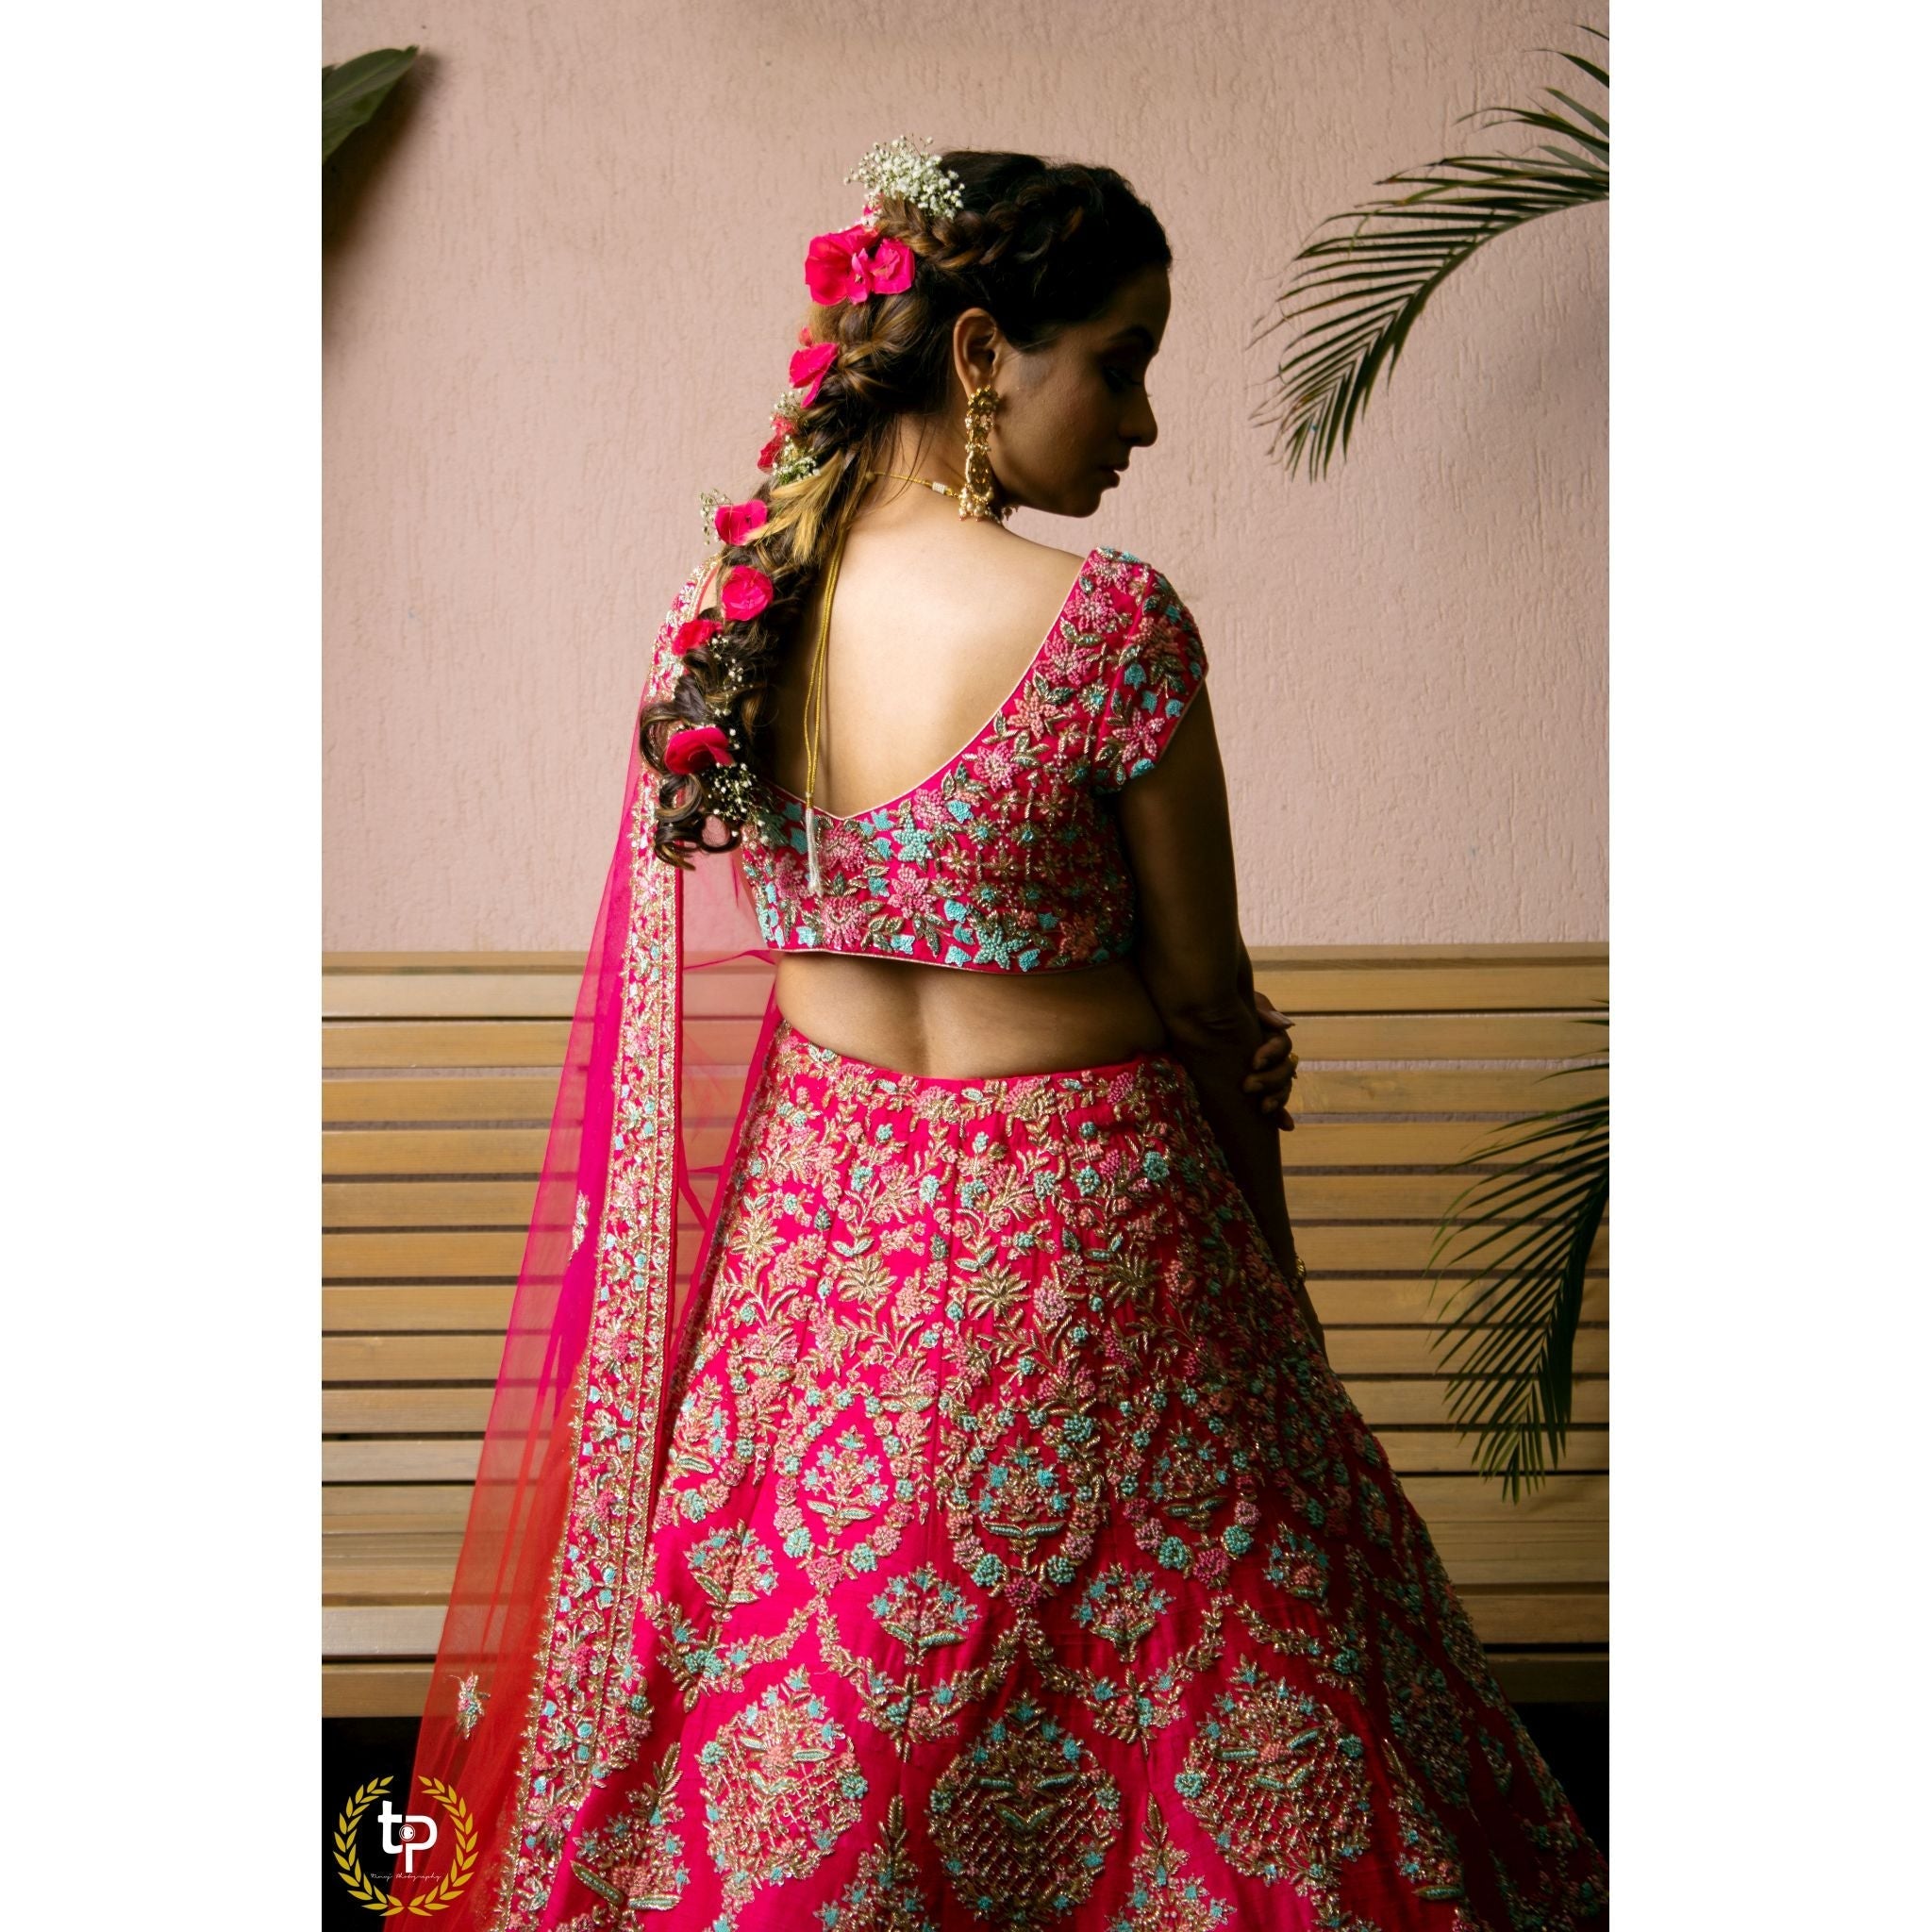 Hot Pink Vintage Lehenga Set - Indian Designer Bridal Wedding Outfit